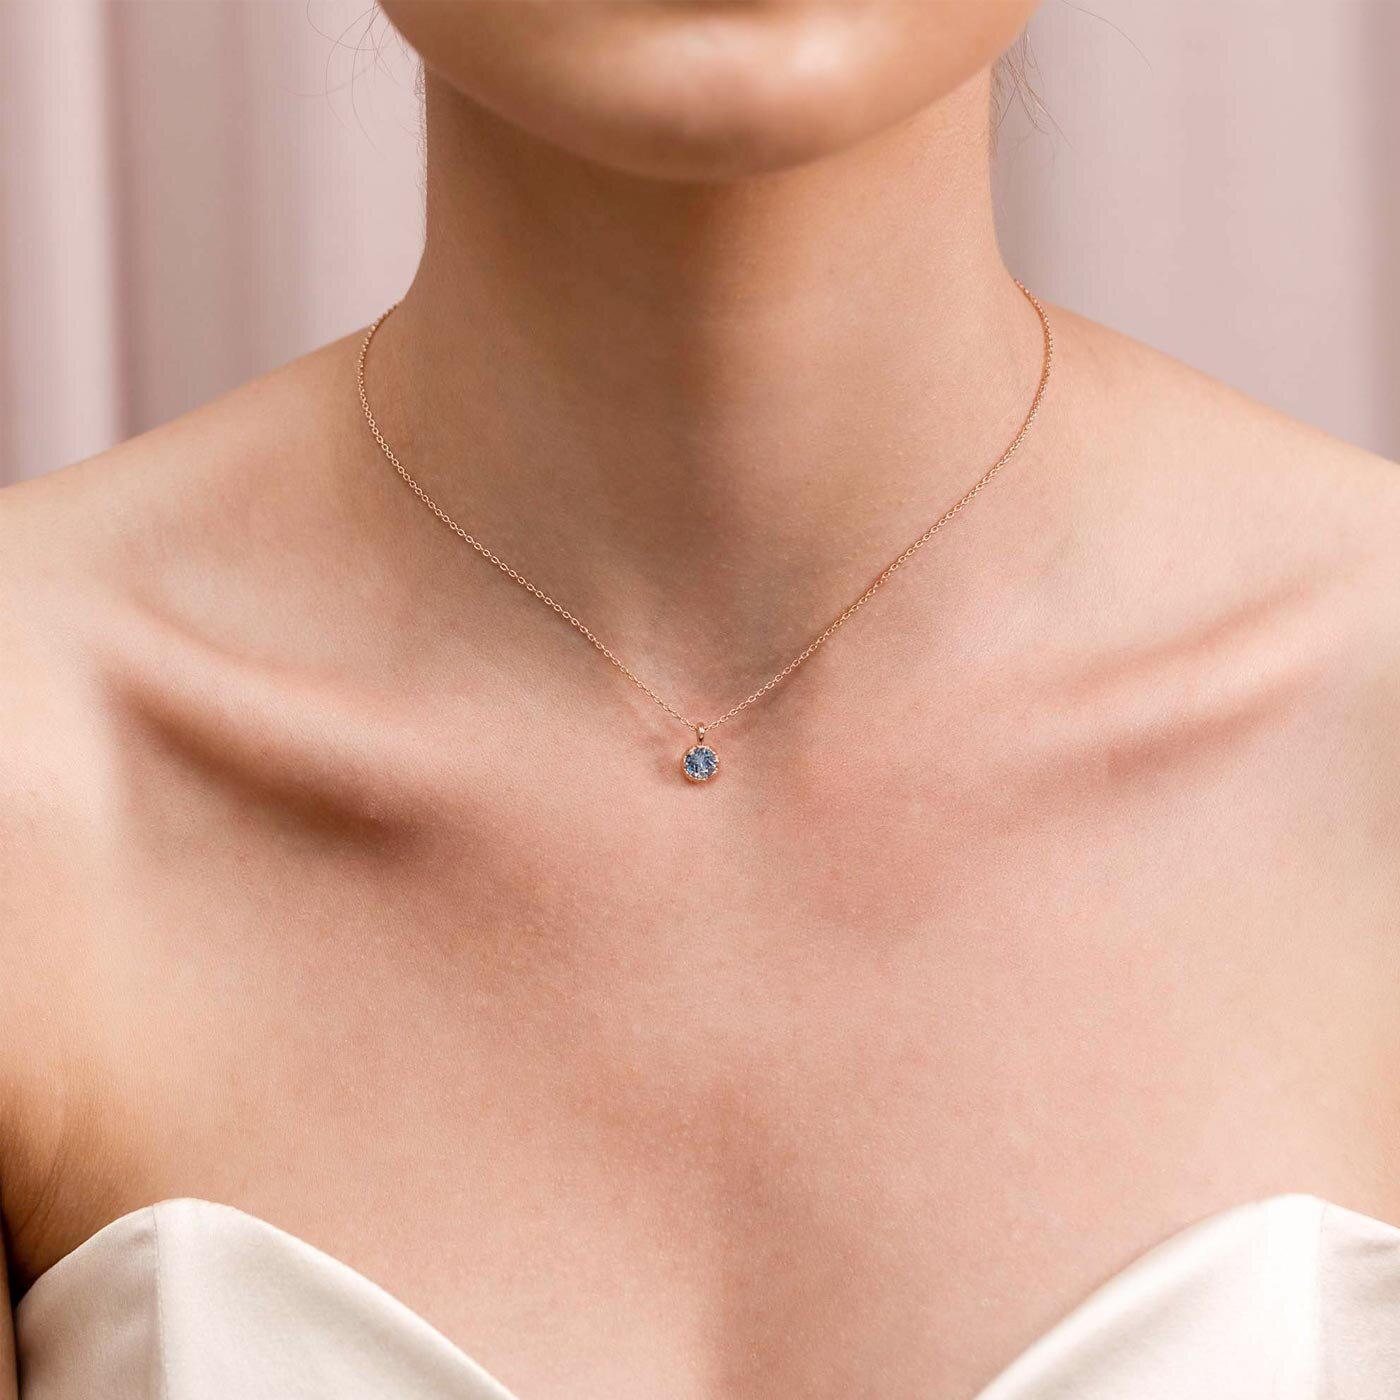 Petite Victoria necklace - Light sapphire